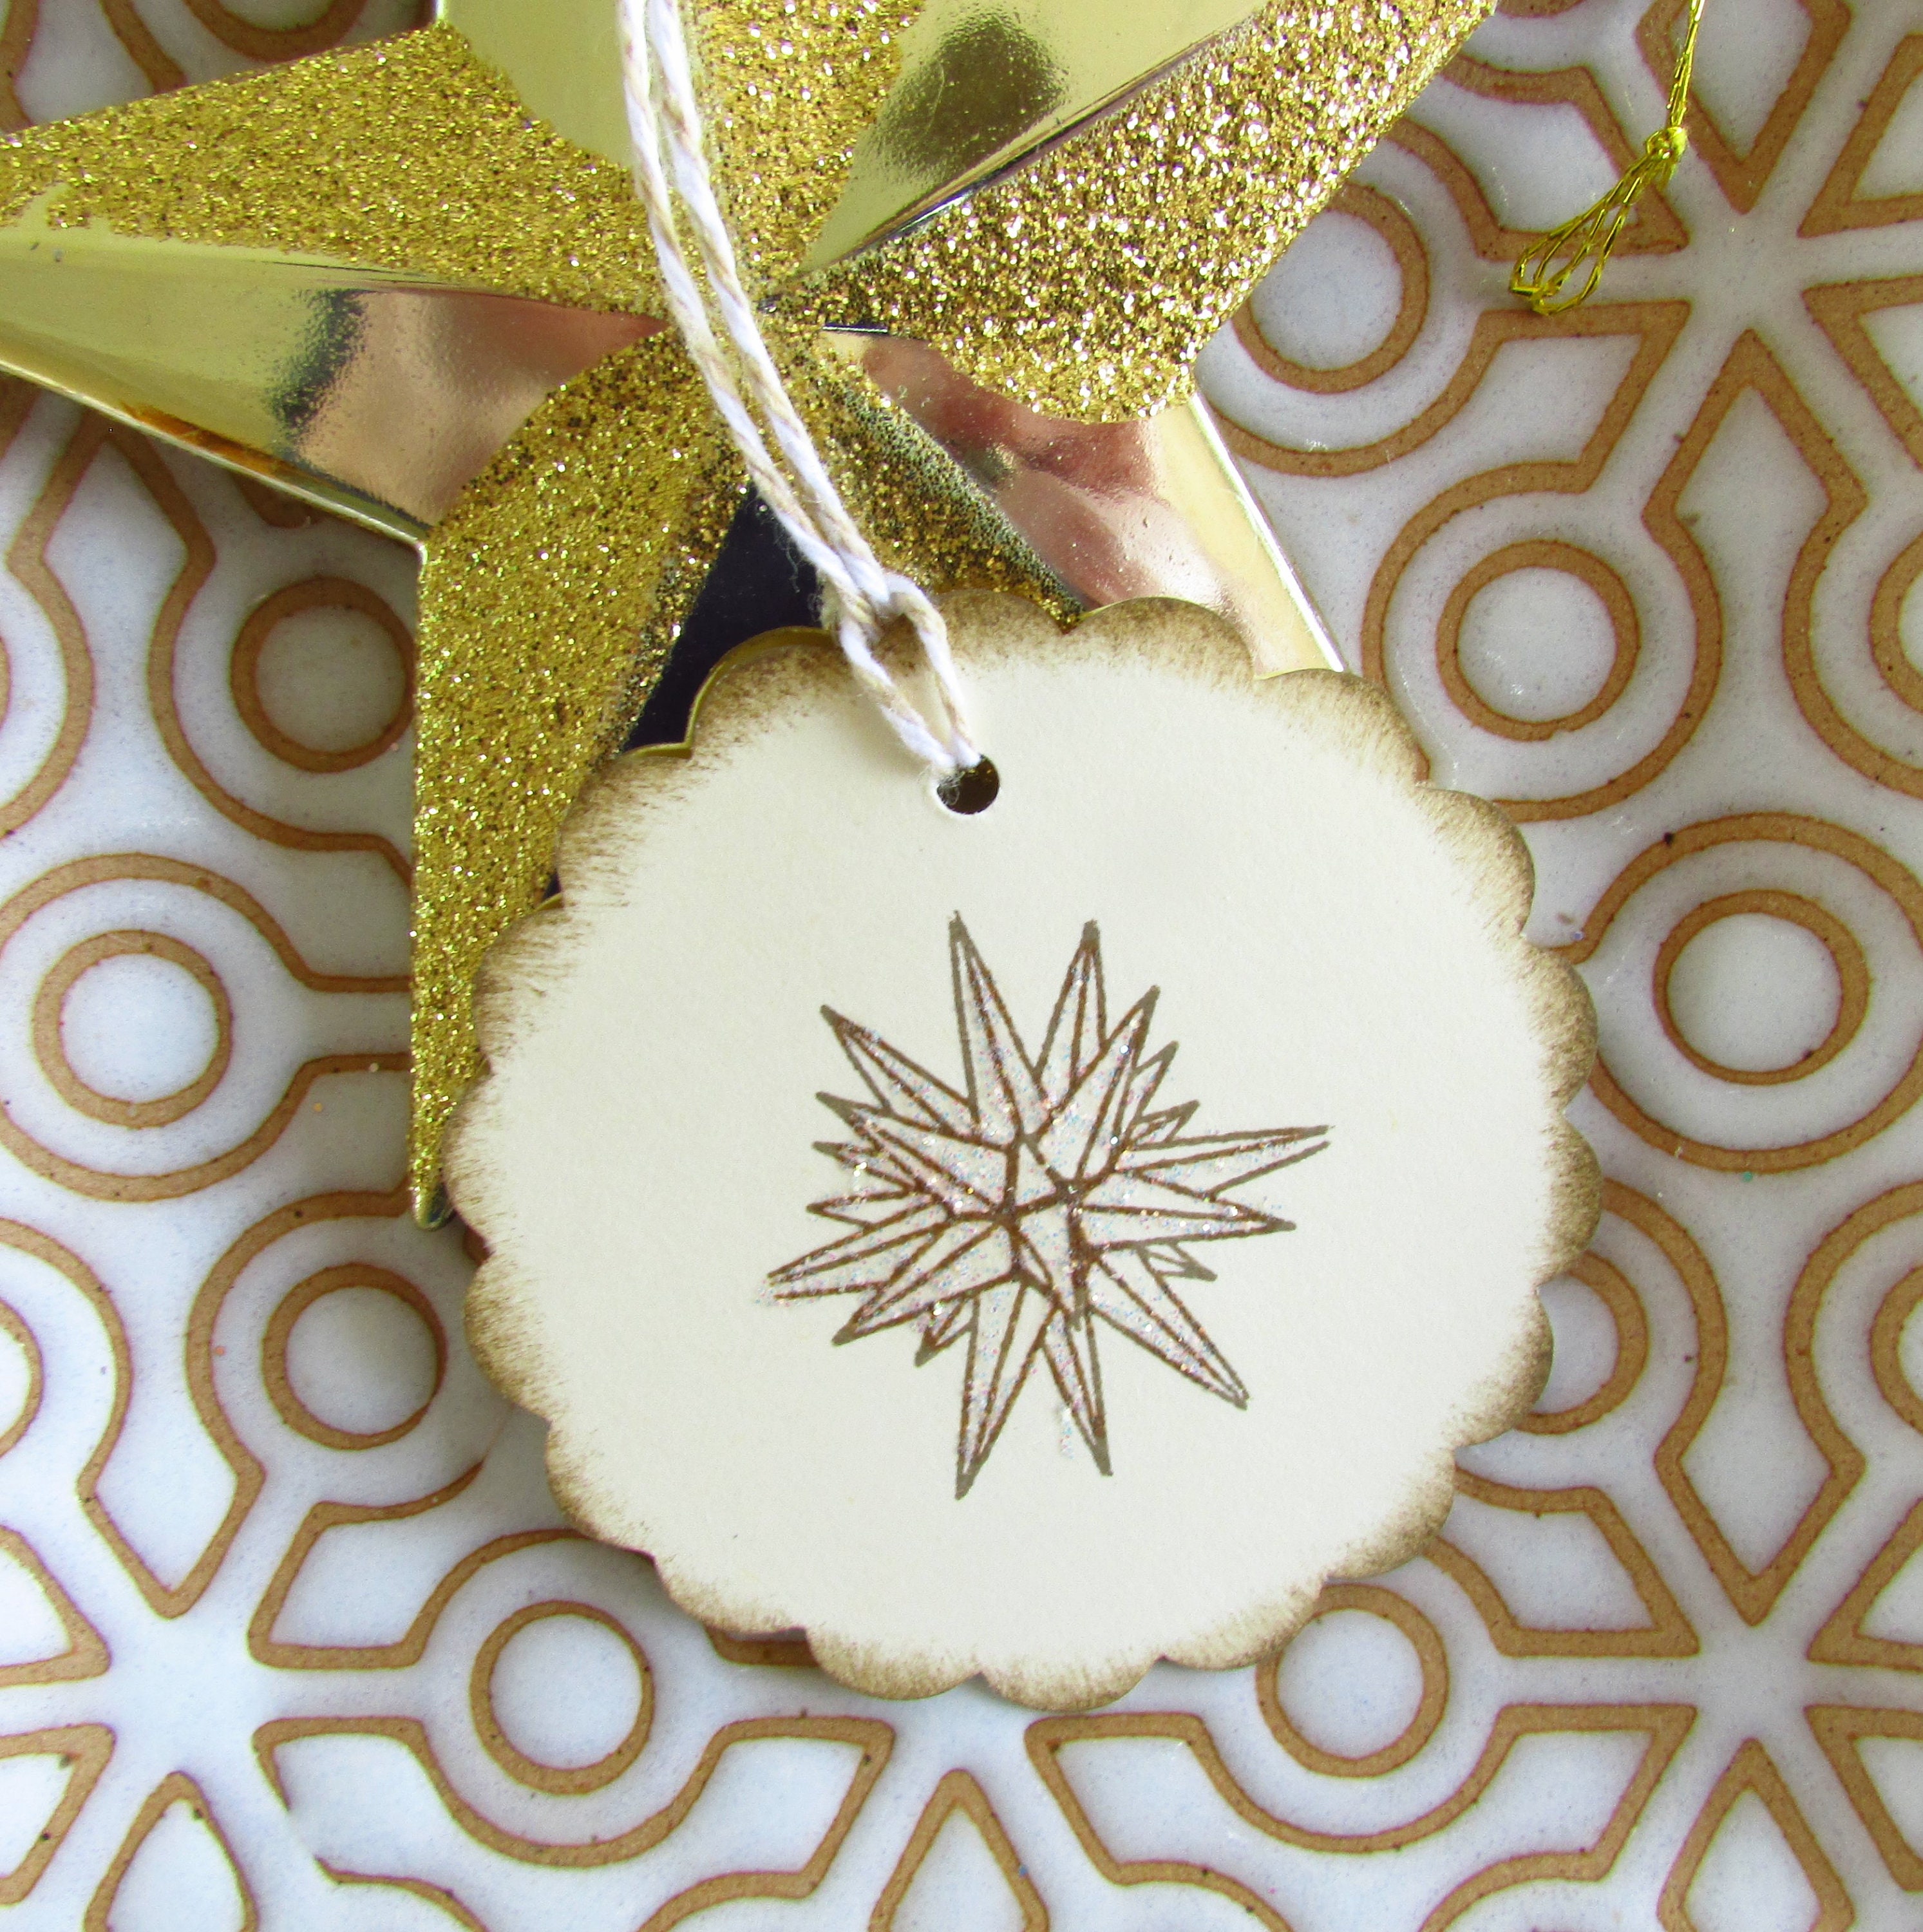 Moravian Star Christmas Ornaments - Free Laser Designs - Glowforge Owners  Forum